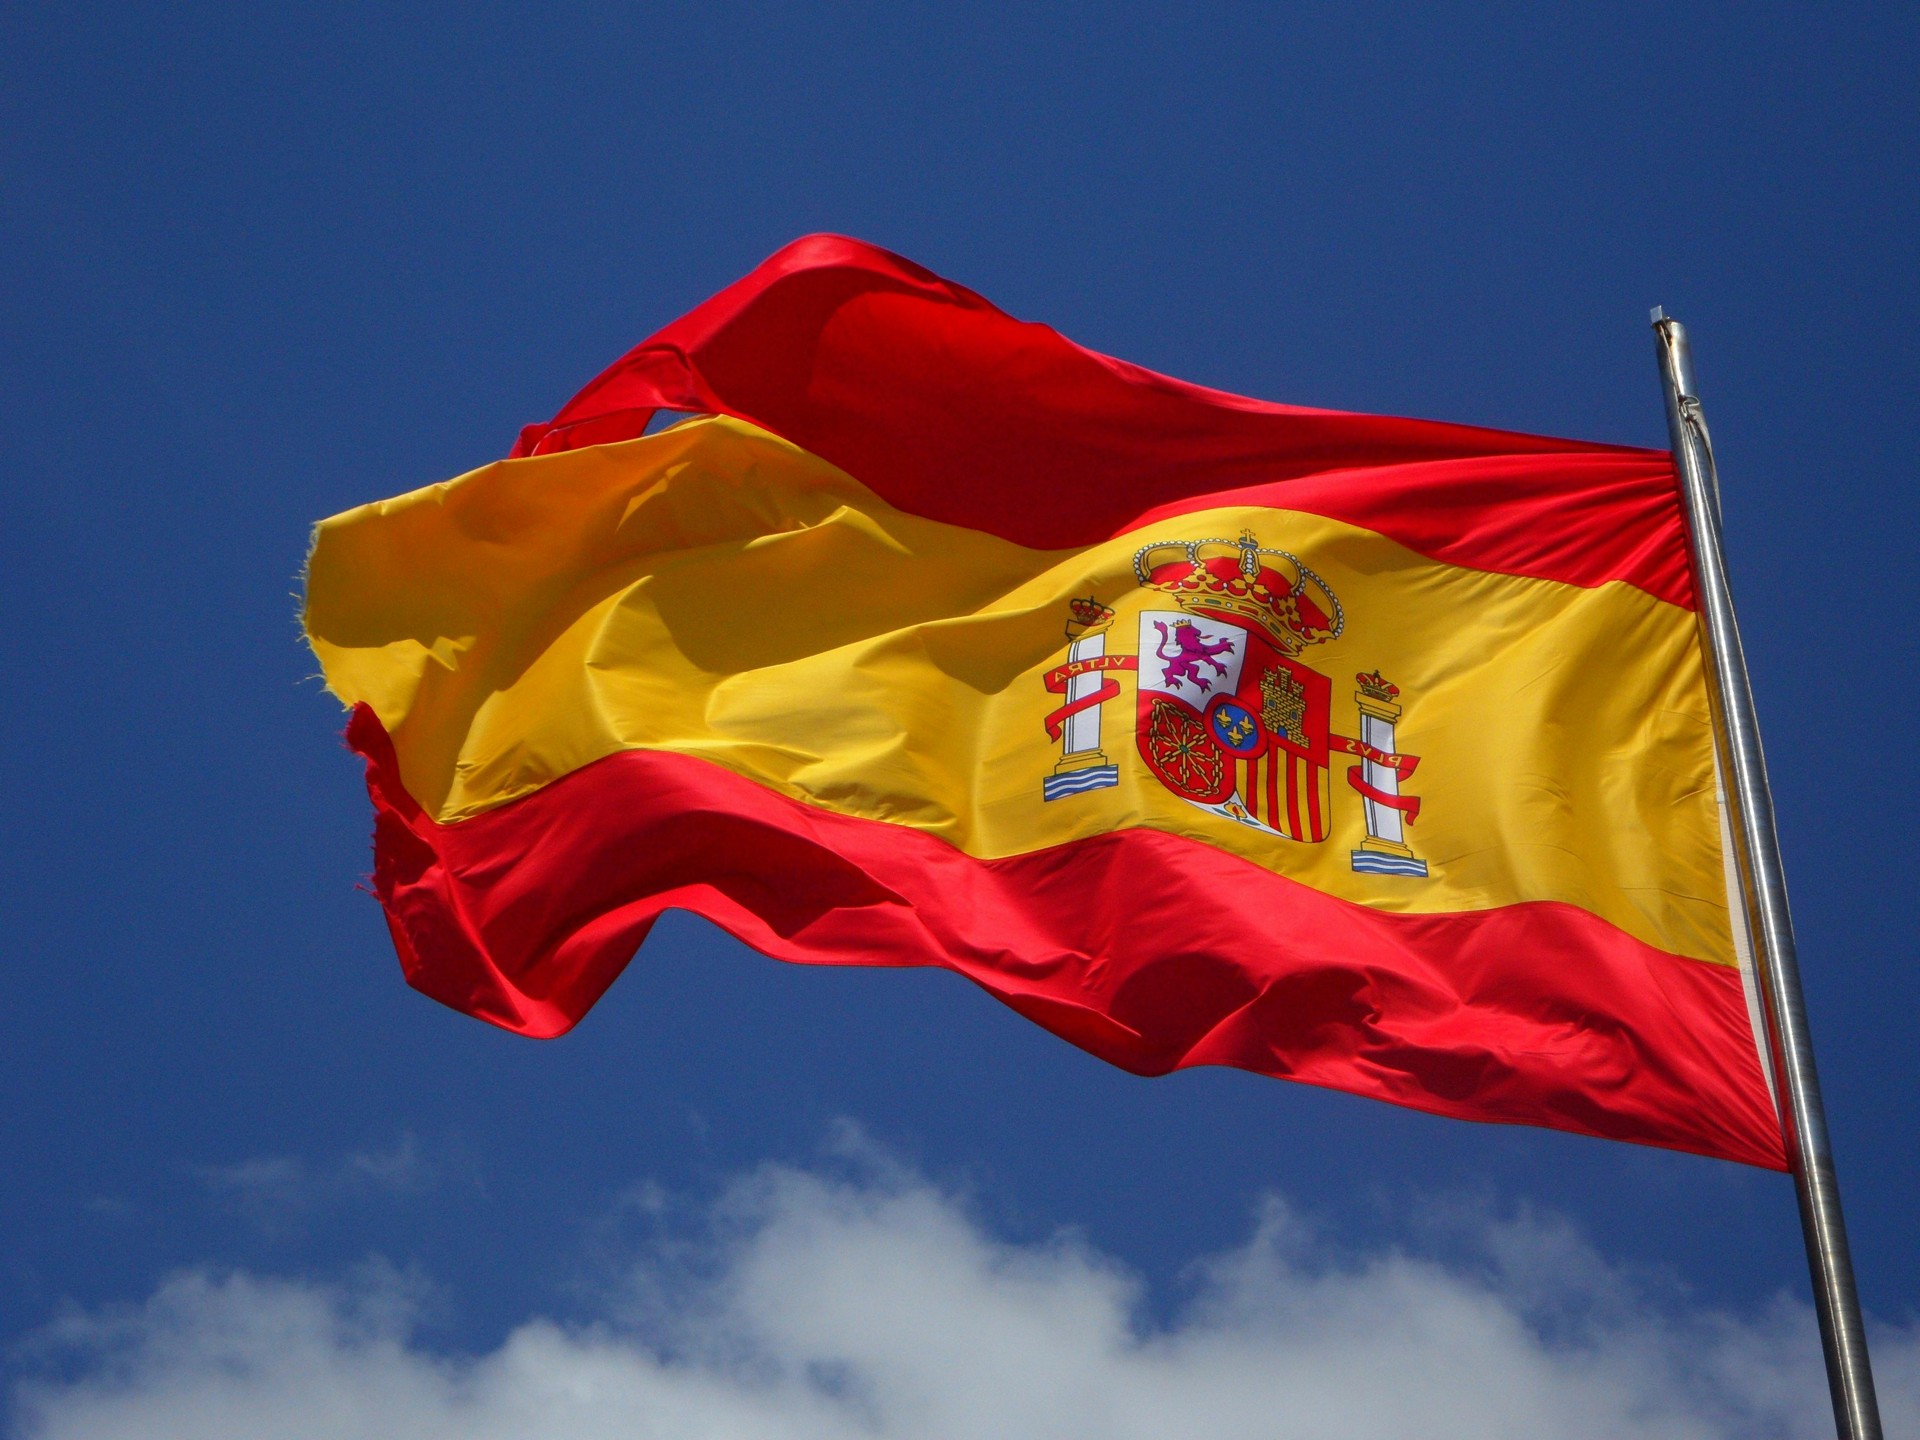 Op vakantie naar Spanje - Spaanse Vlag